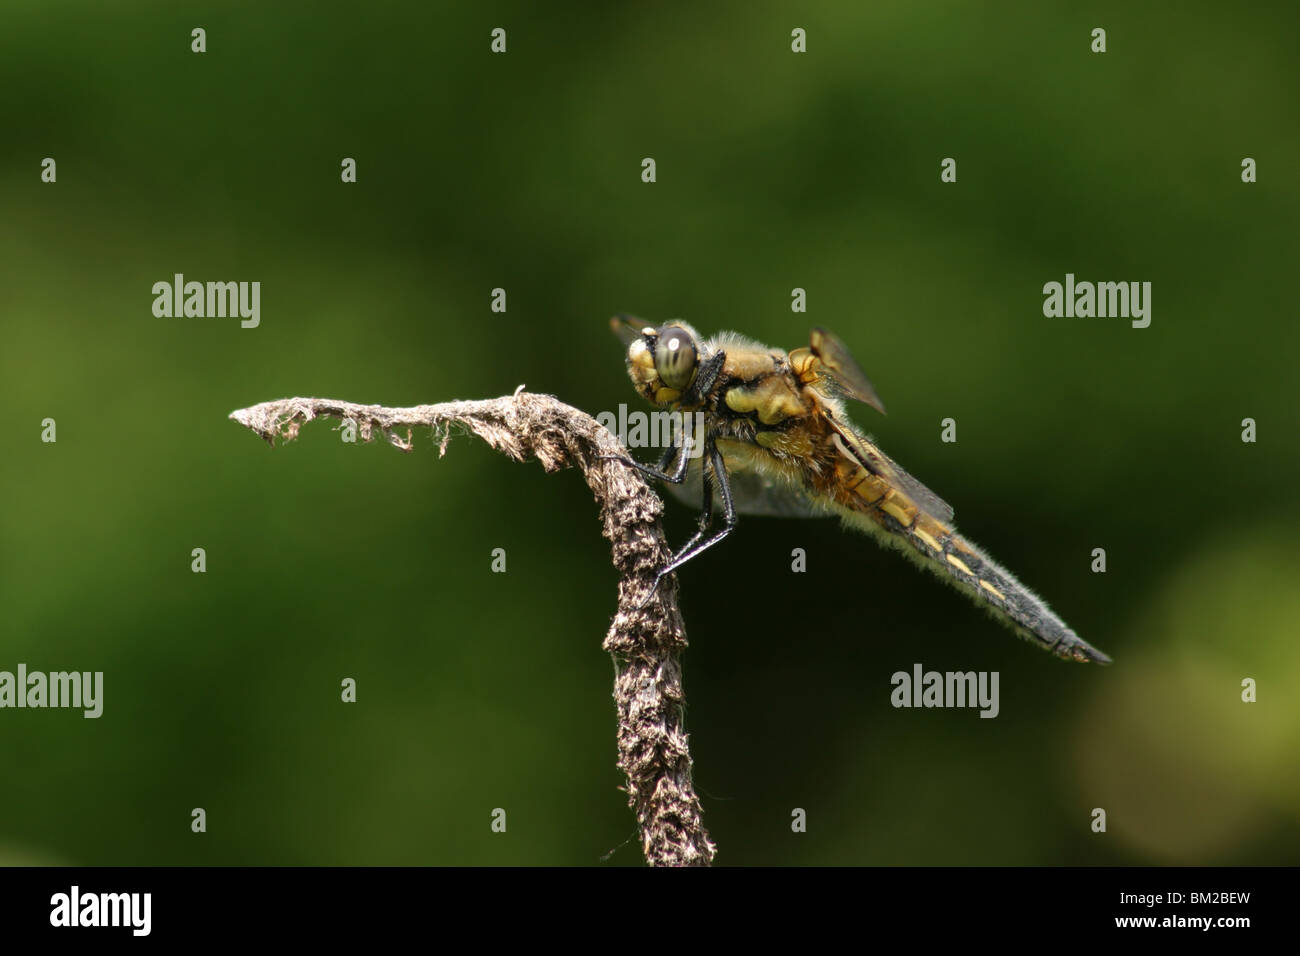 Vierflecklibelle / dragonfly Stock Photo